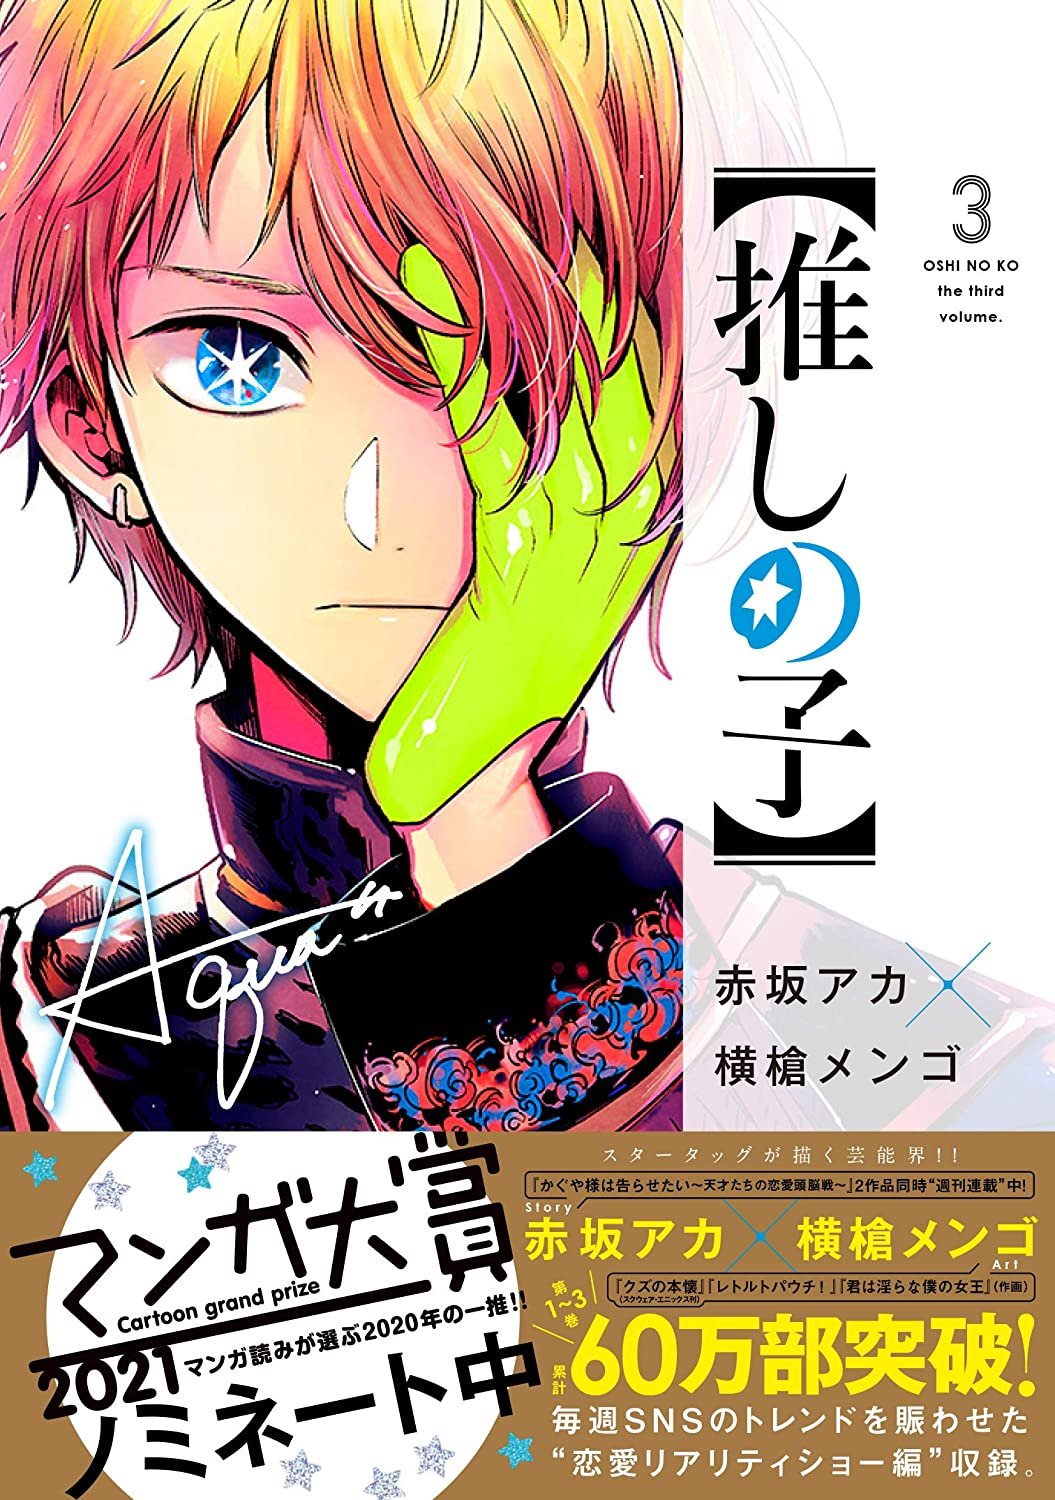 Manga Mogura RE on X: Aka Akasaka (Kaguya-sama, Oshi no Ko) will publish a  new manga work in Weekly Young Jump magazine. The artist who will draw his  story is searched via